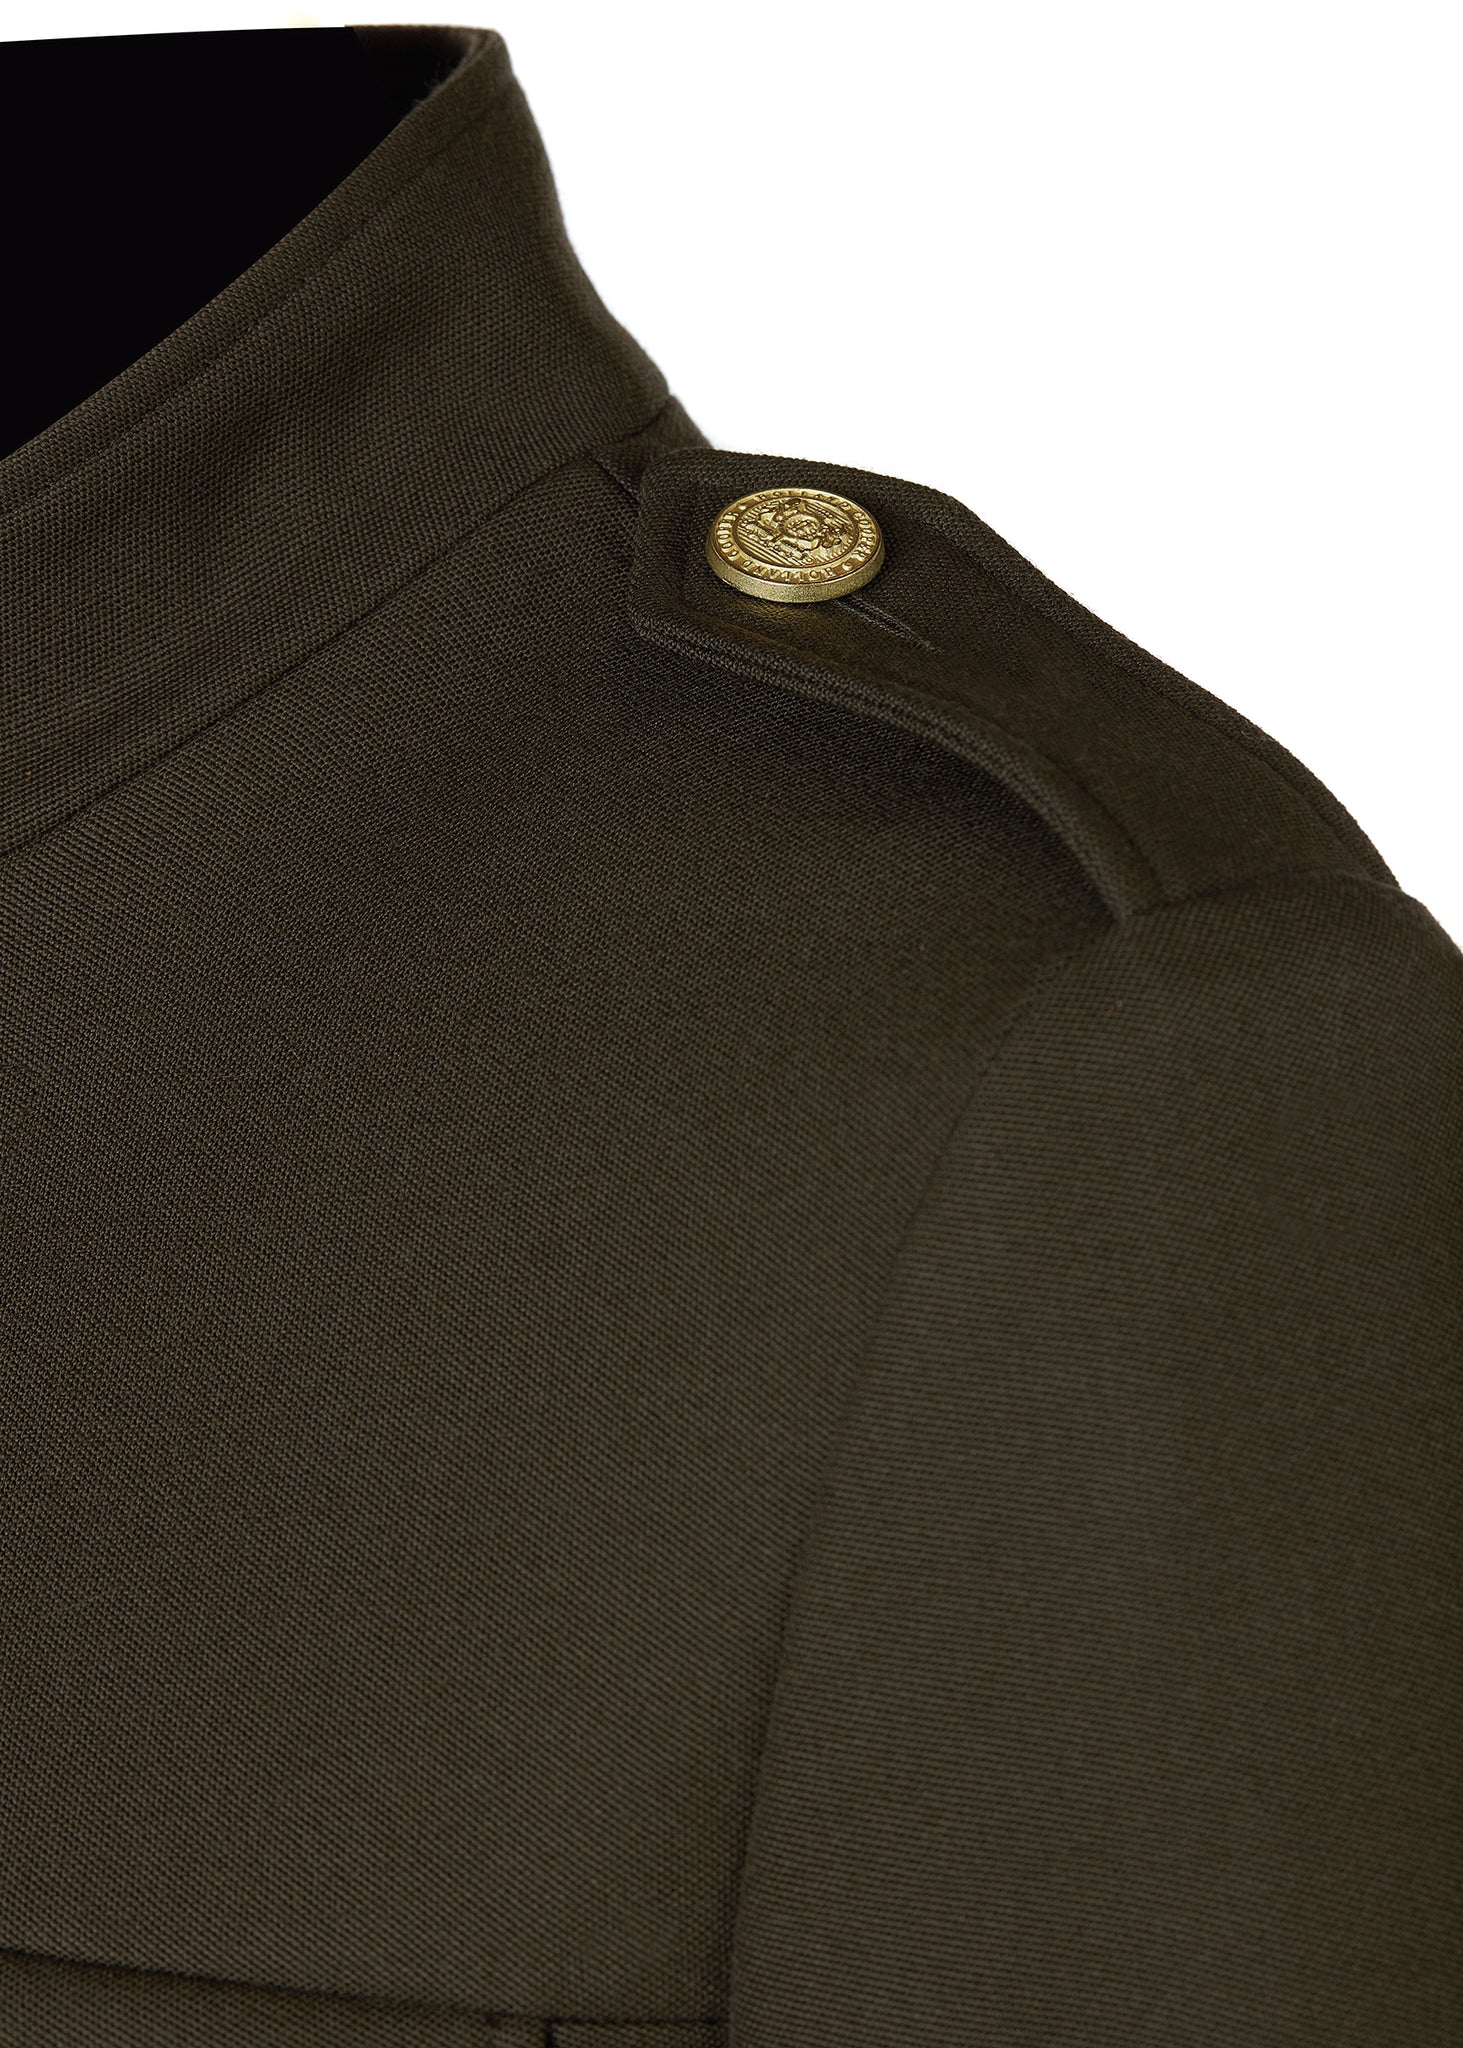 shoulder detail of Womens khaki front buttoned tweed cape coat